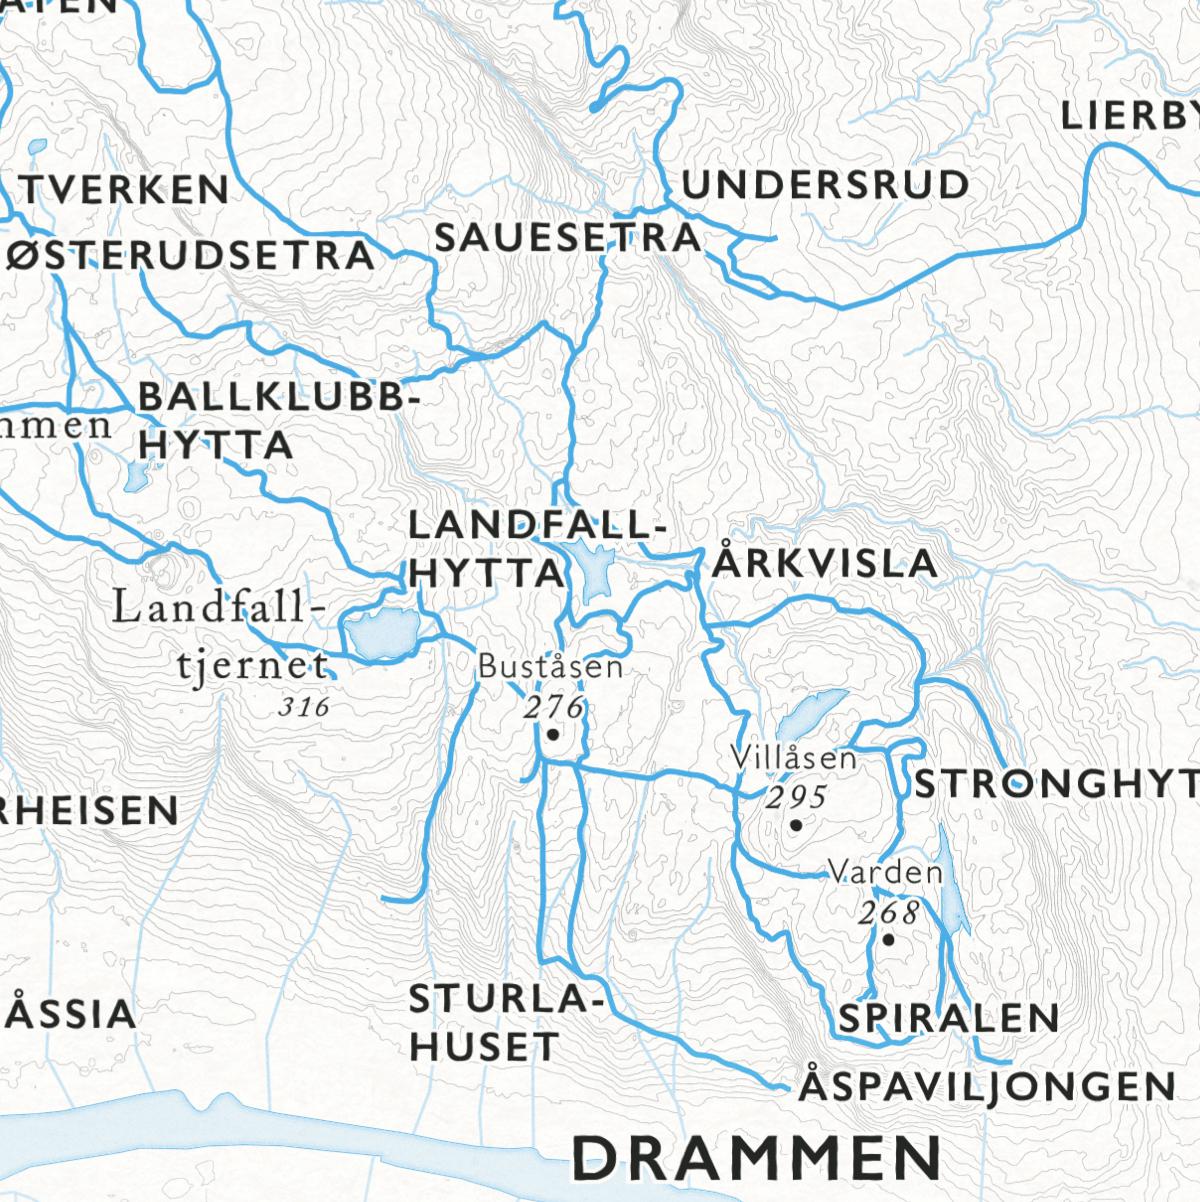 Skikart Finnemarka som viser Årksvisla, Sturlahuset, Spiralen, Landfallhytta og Sausetra